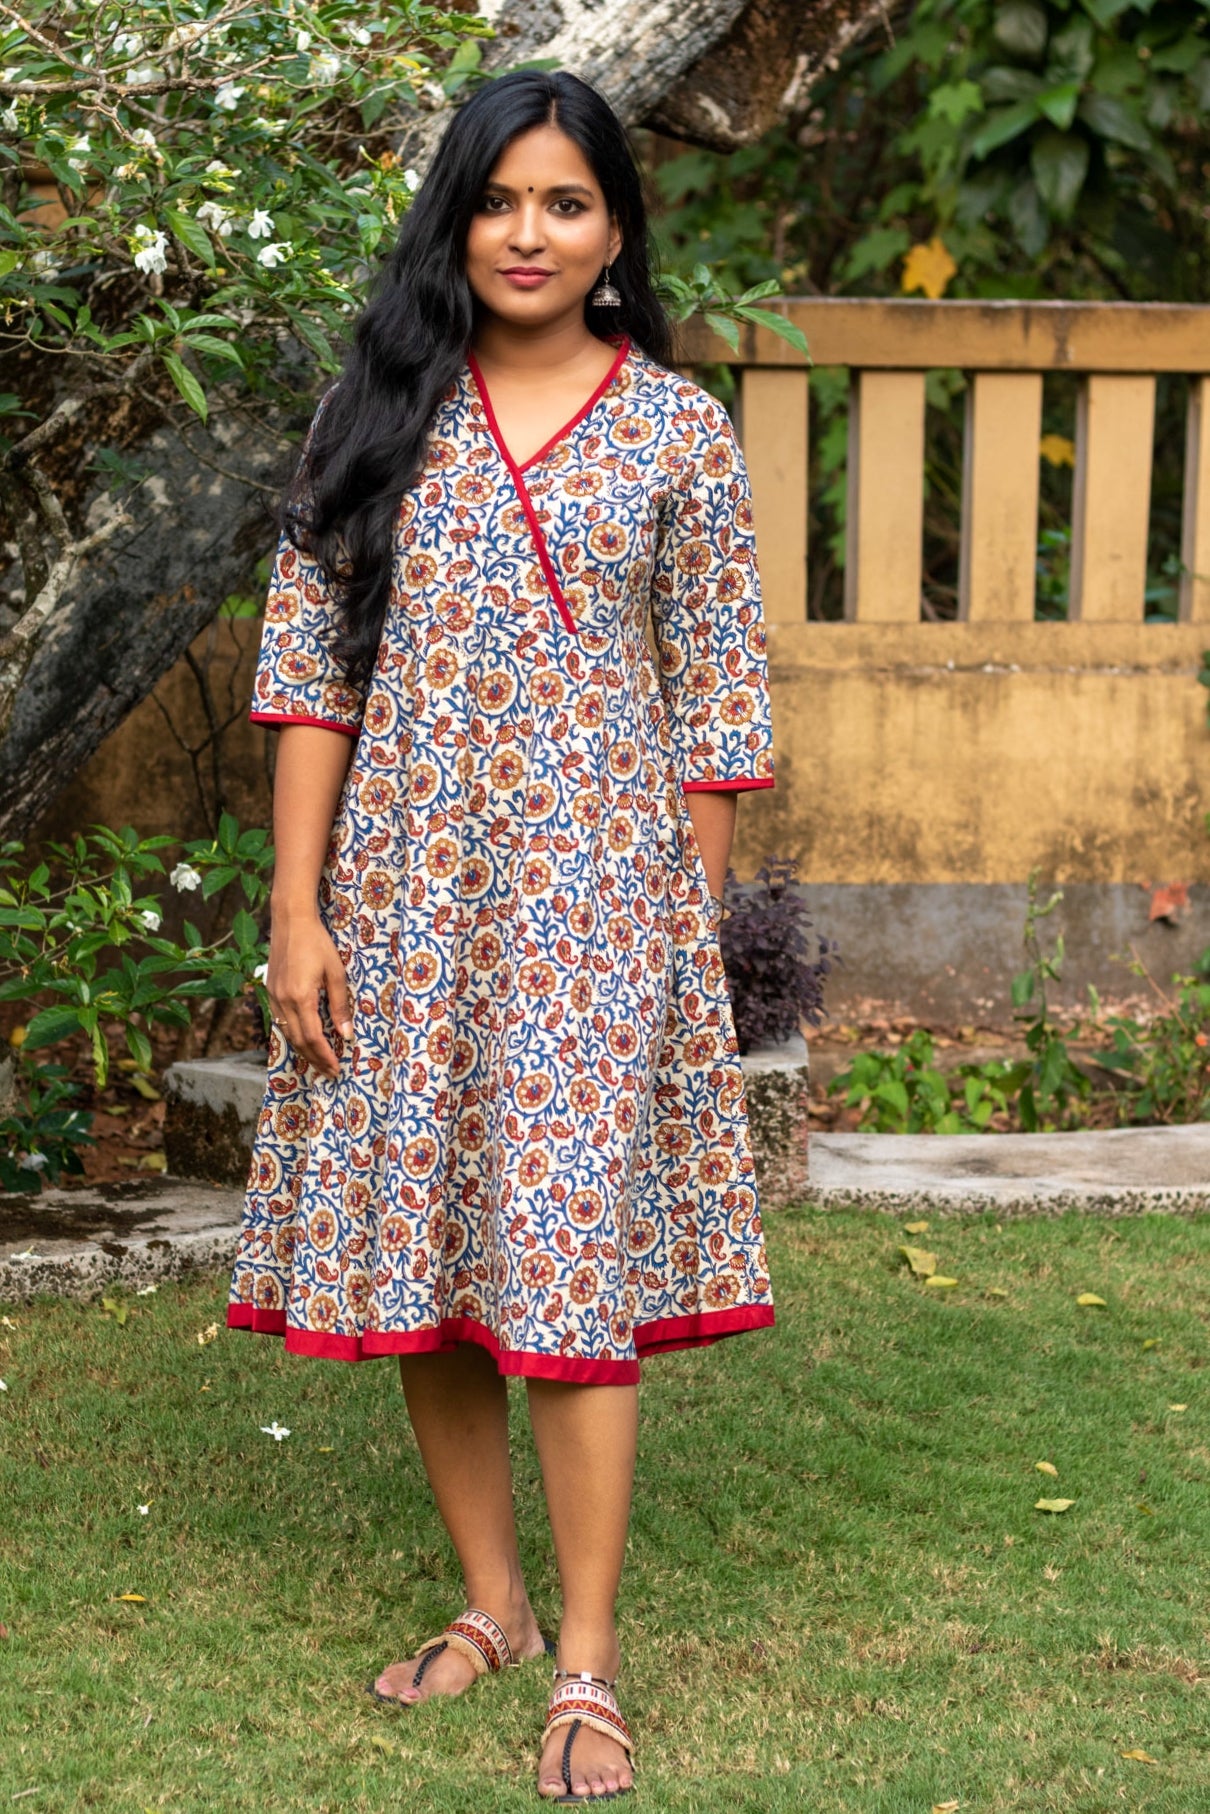 Dress Online: Buy Dresses for Women Online in India - Aachho